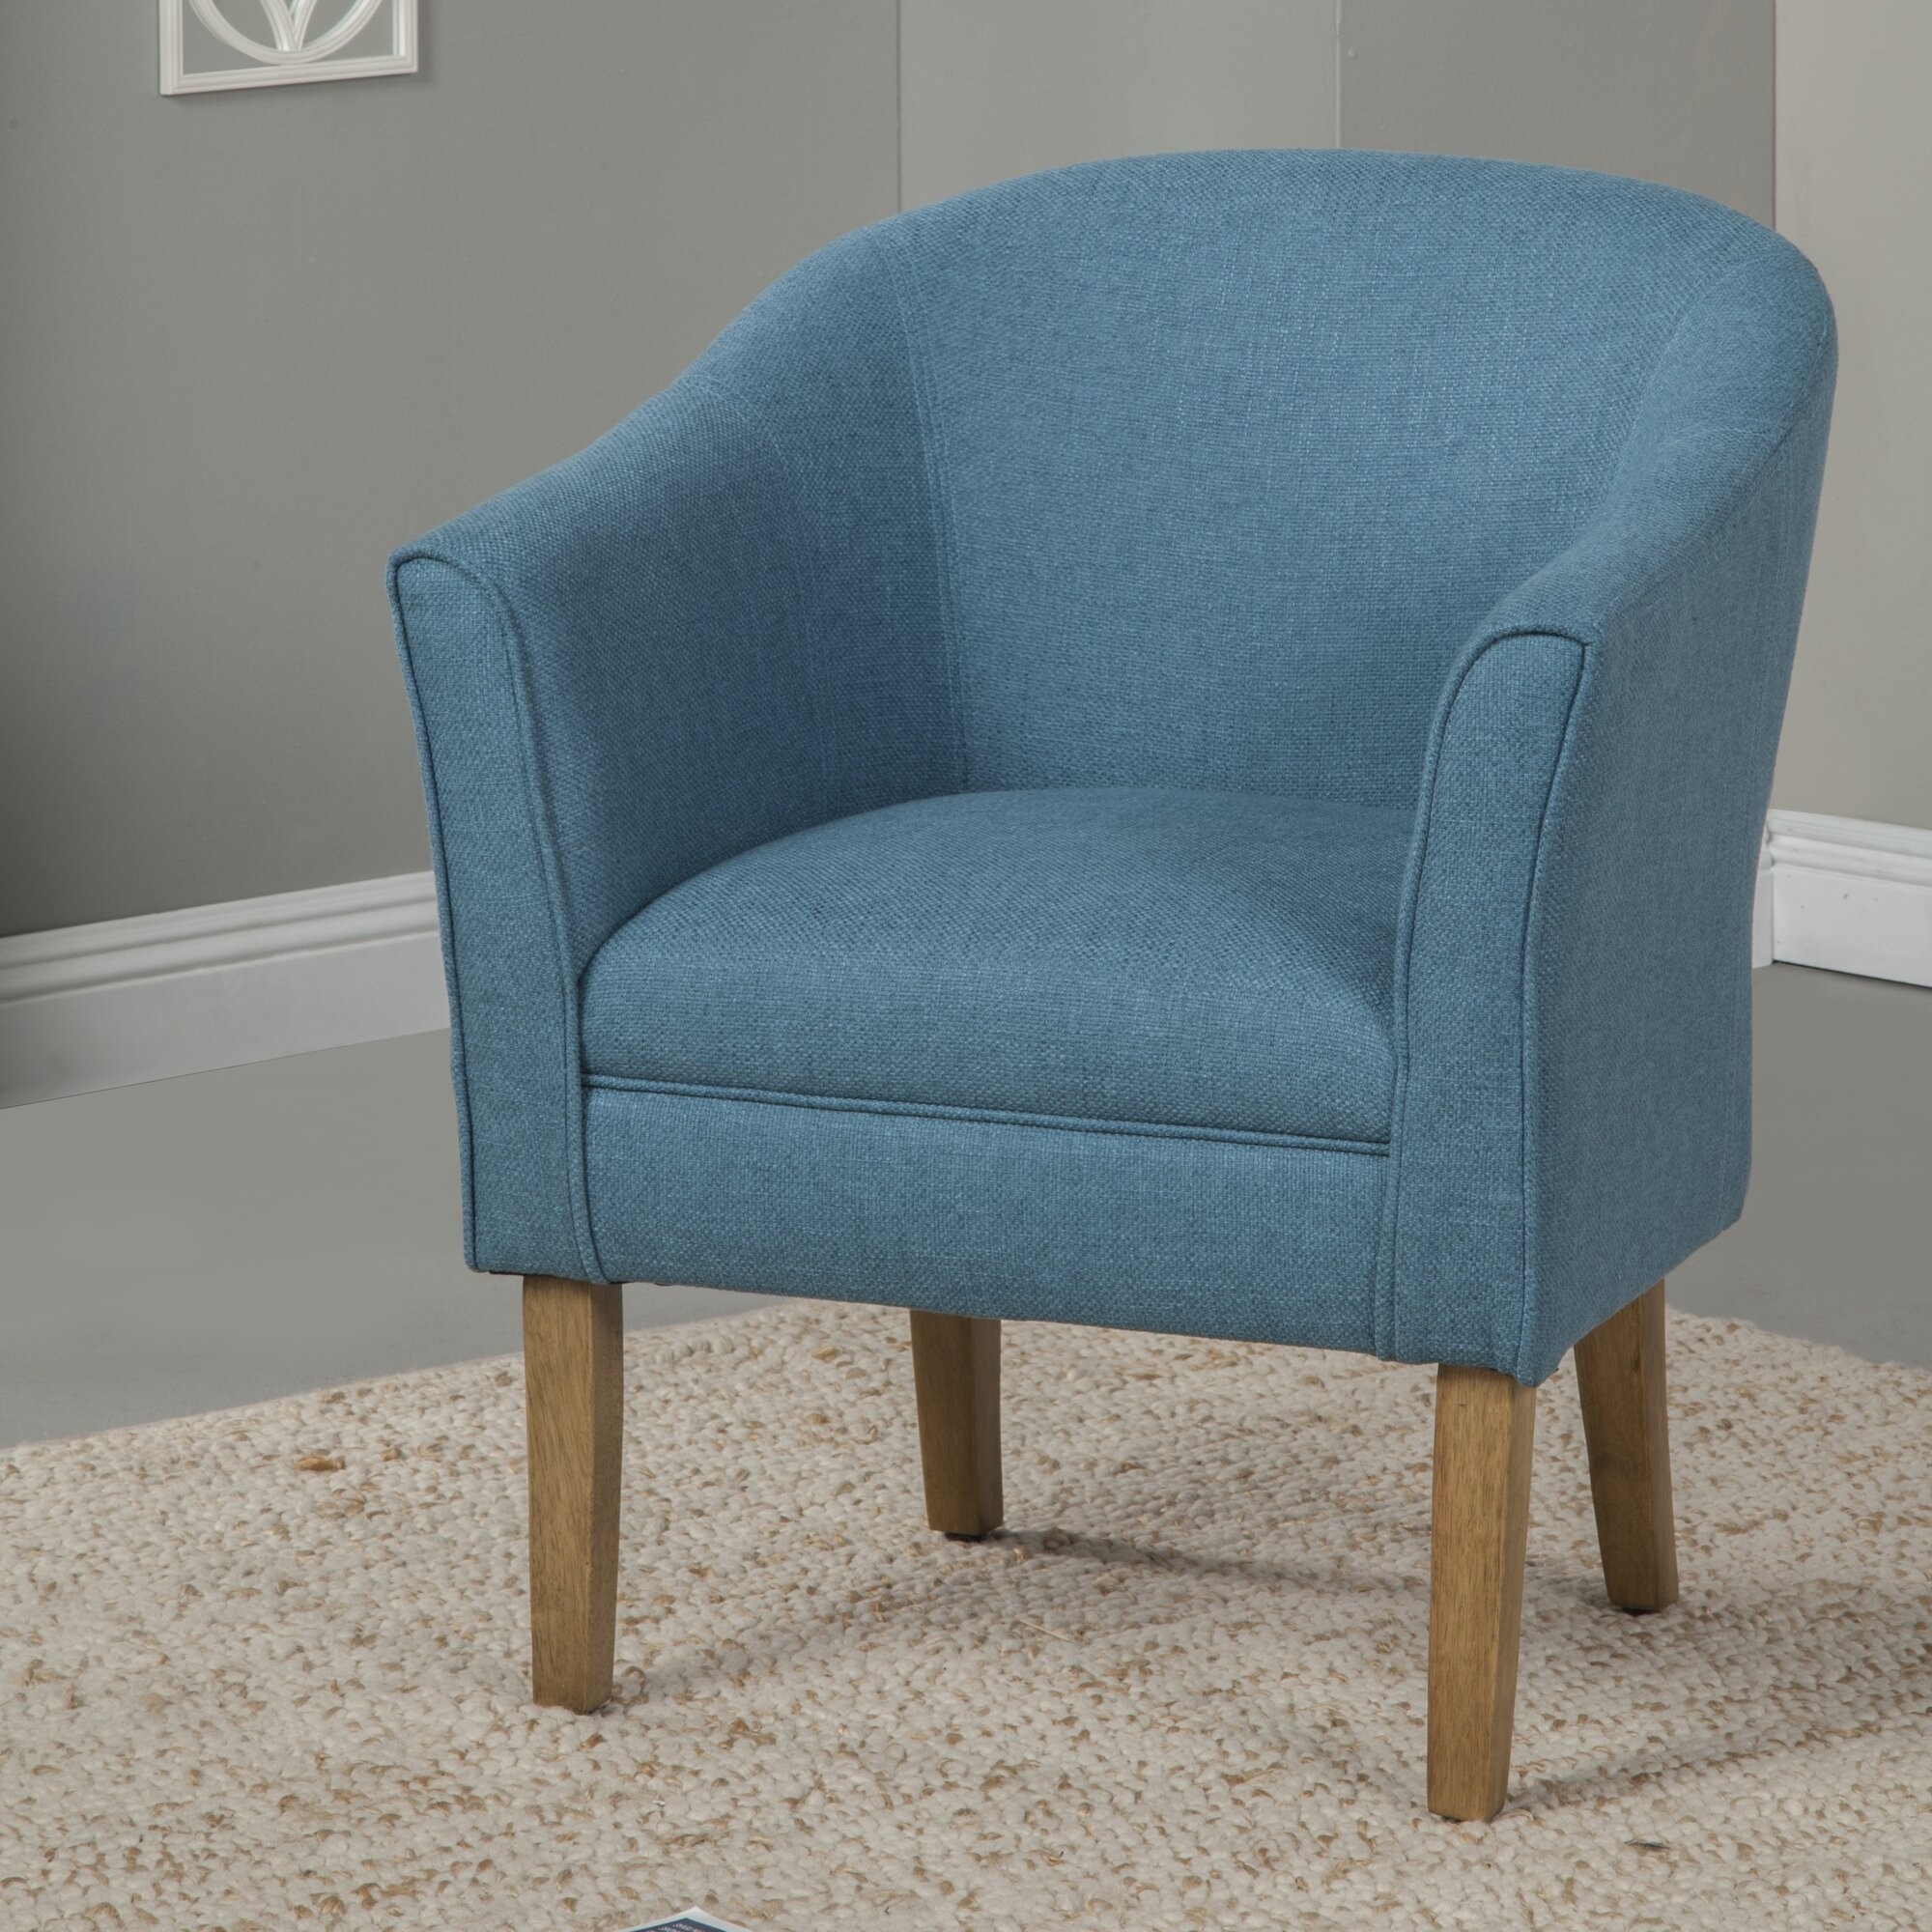 Causey upholstered barrel chair reviews allmodern